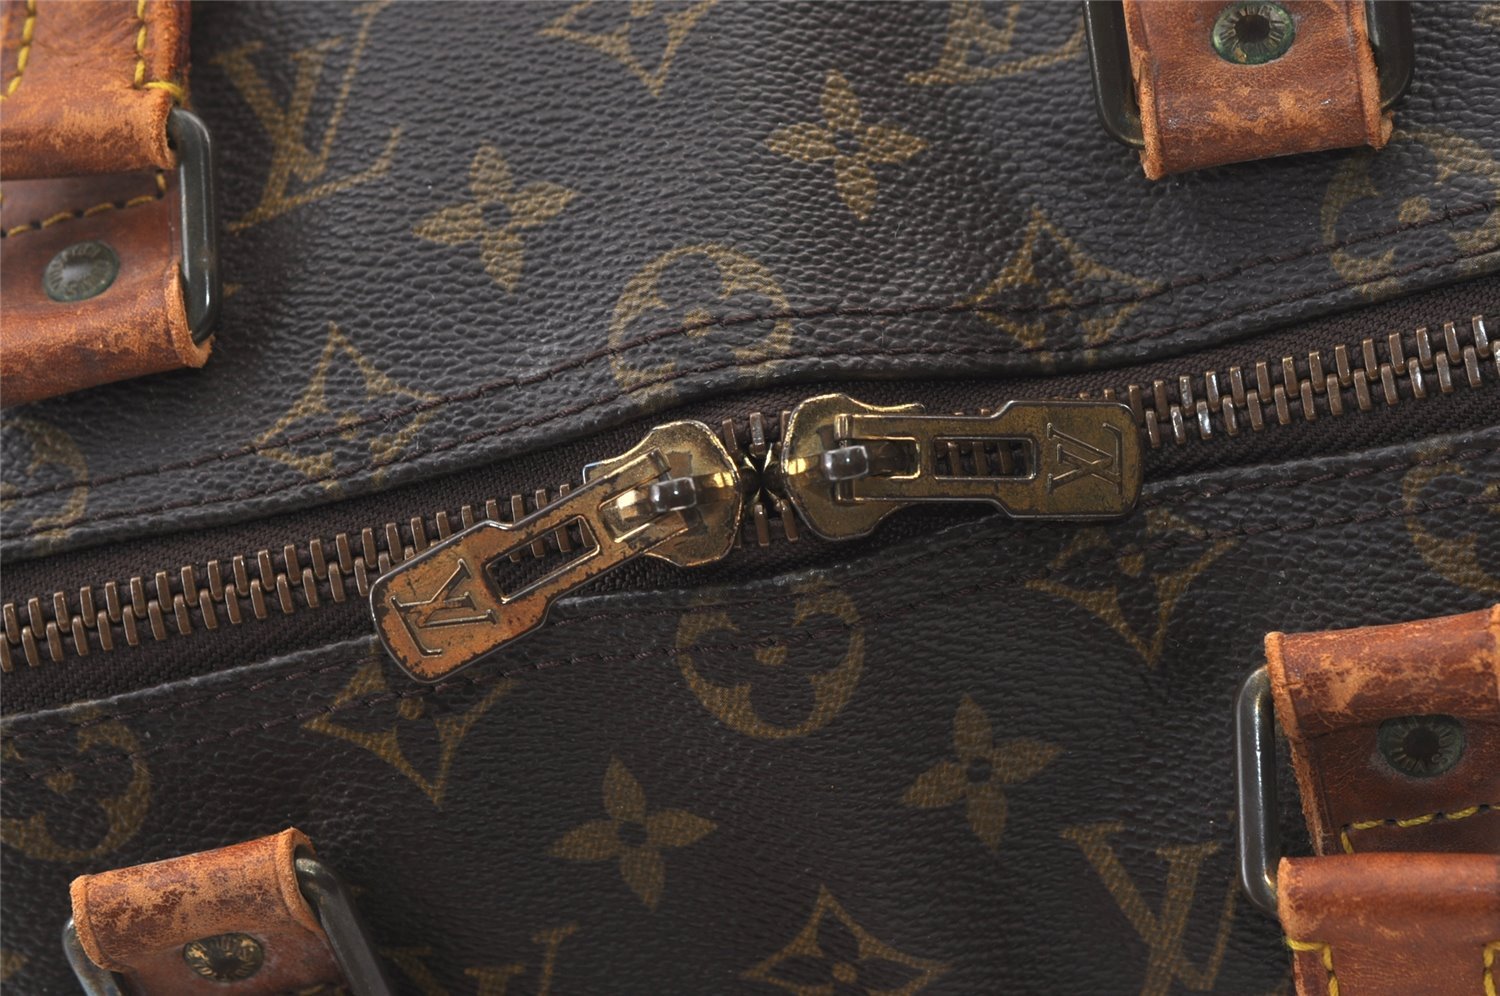 Authentic Louis Vuitton Monogram Keepall 50 Travel Boston Bag M41426 LV 9561J